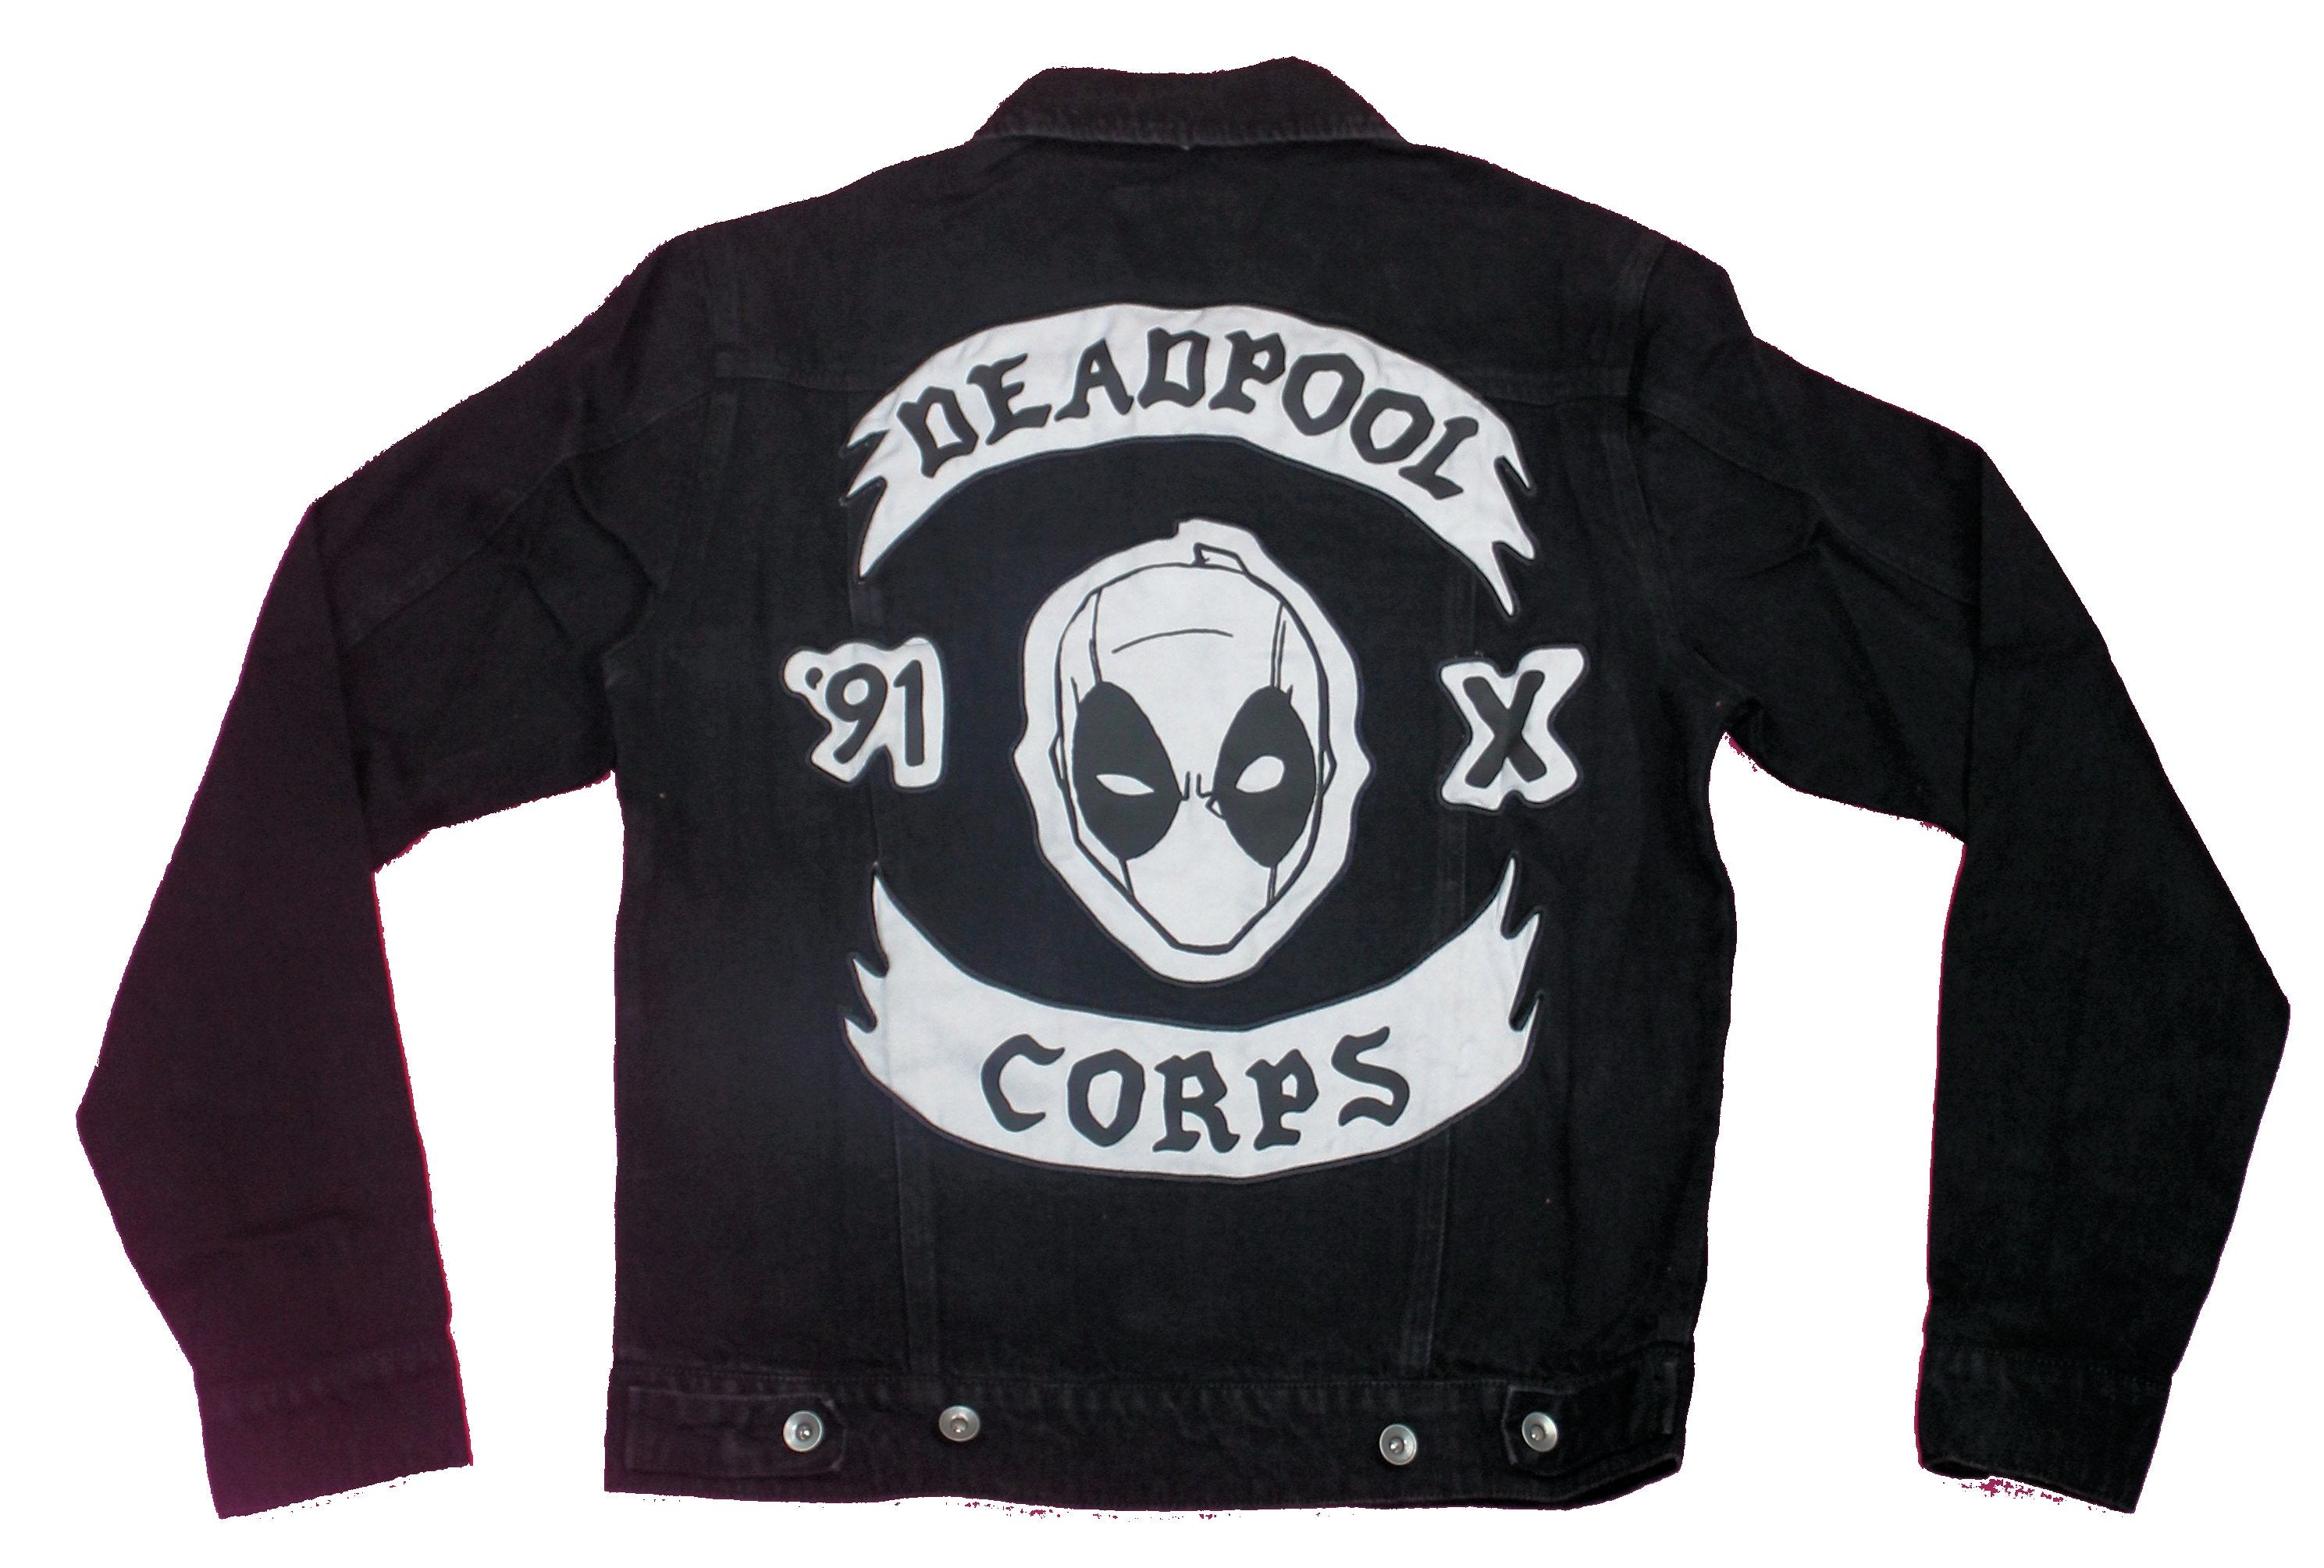 Deadpool Mens Denim Jacket - Mercs for Money 91 X Corps